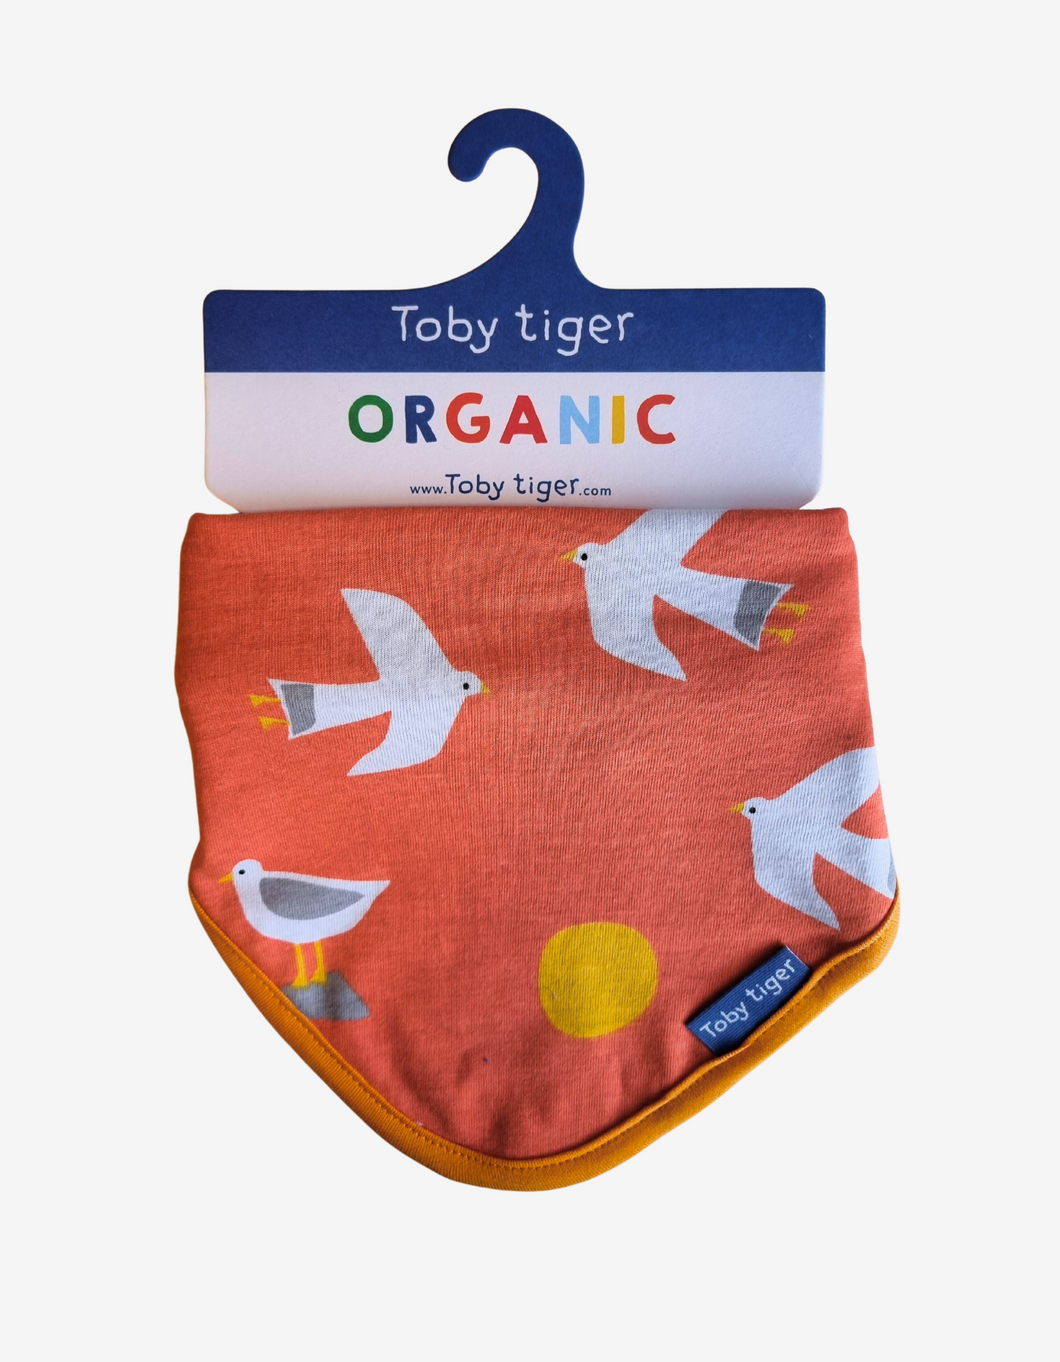 Organic cotton triangular bib with seagull print